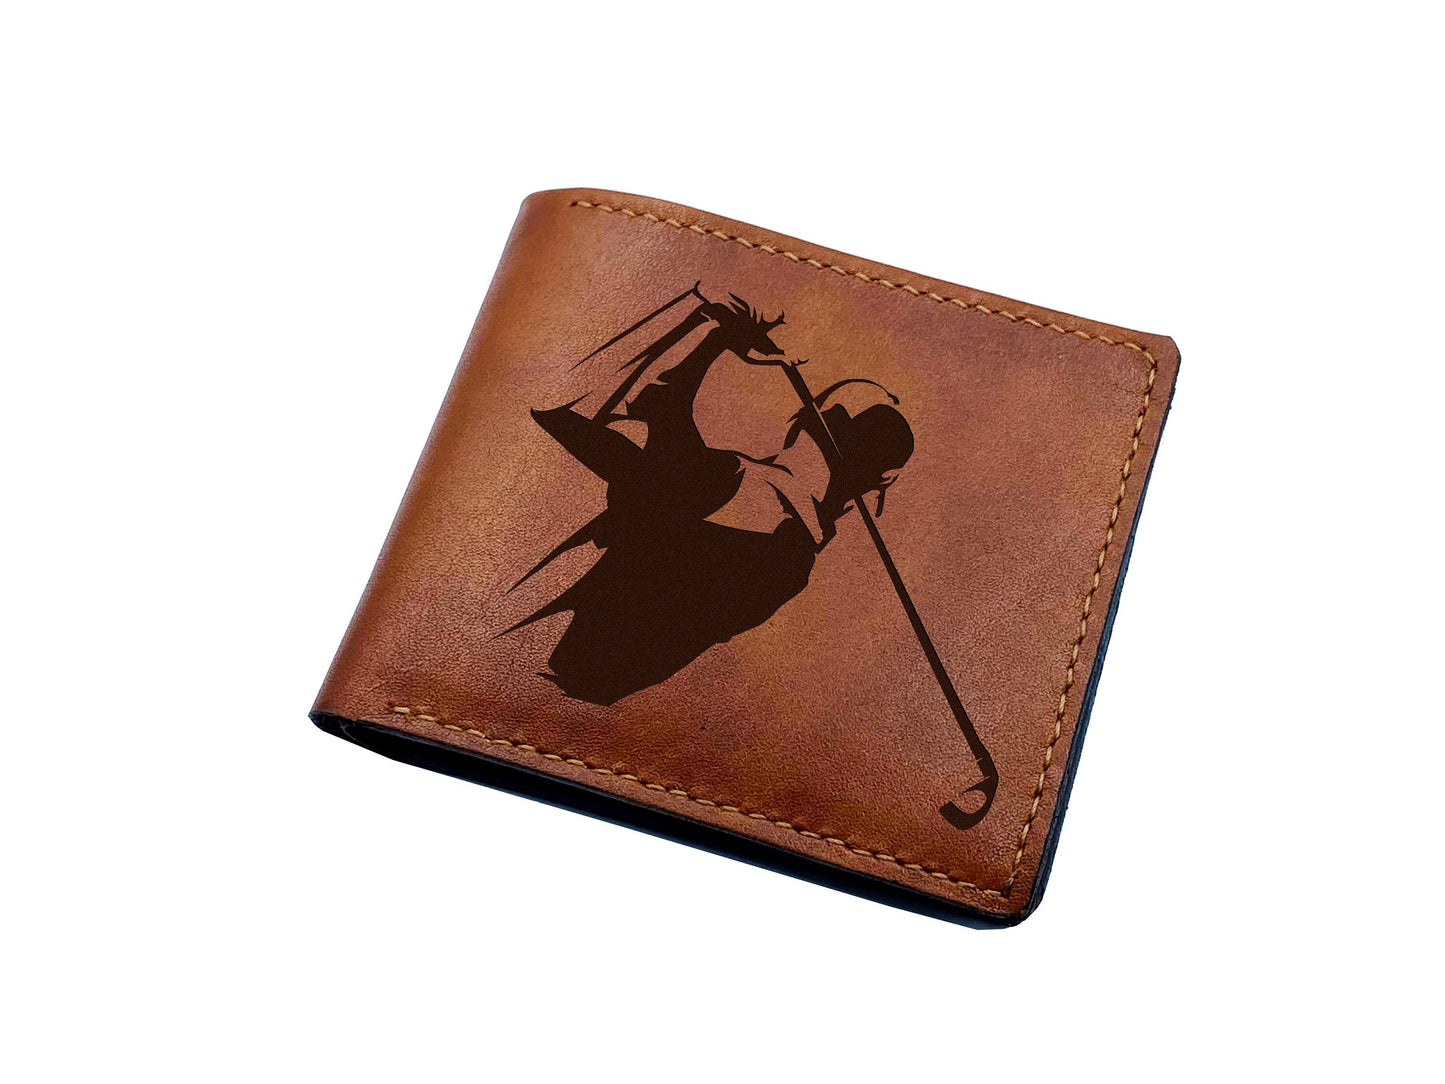 Golf men leather wallet, custom engrave men's gift, christmas gift ideas for dad, husband, golfer leather art, birthday gift for him